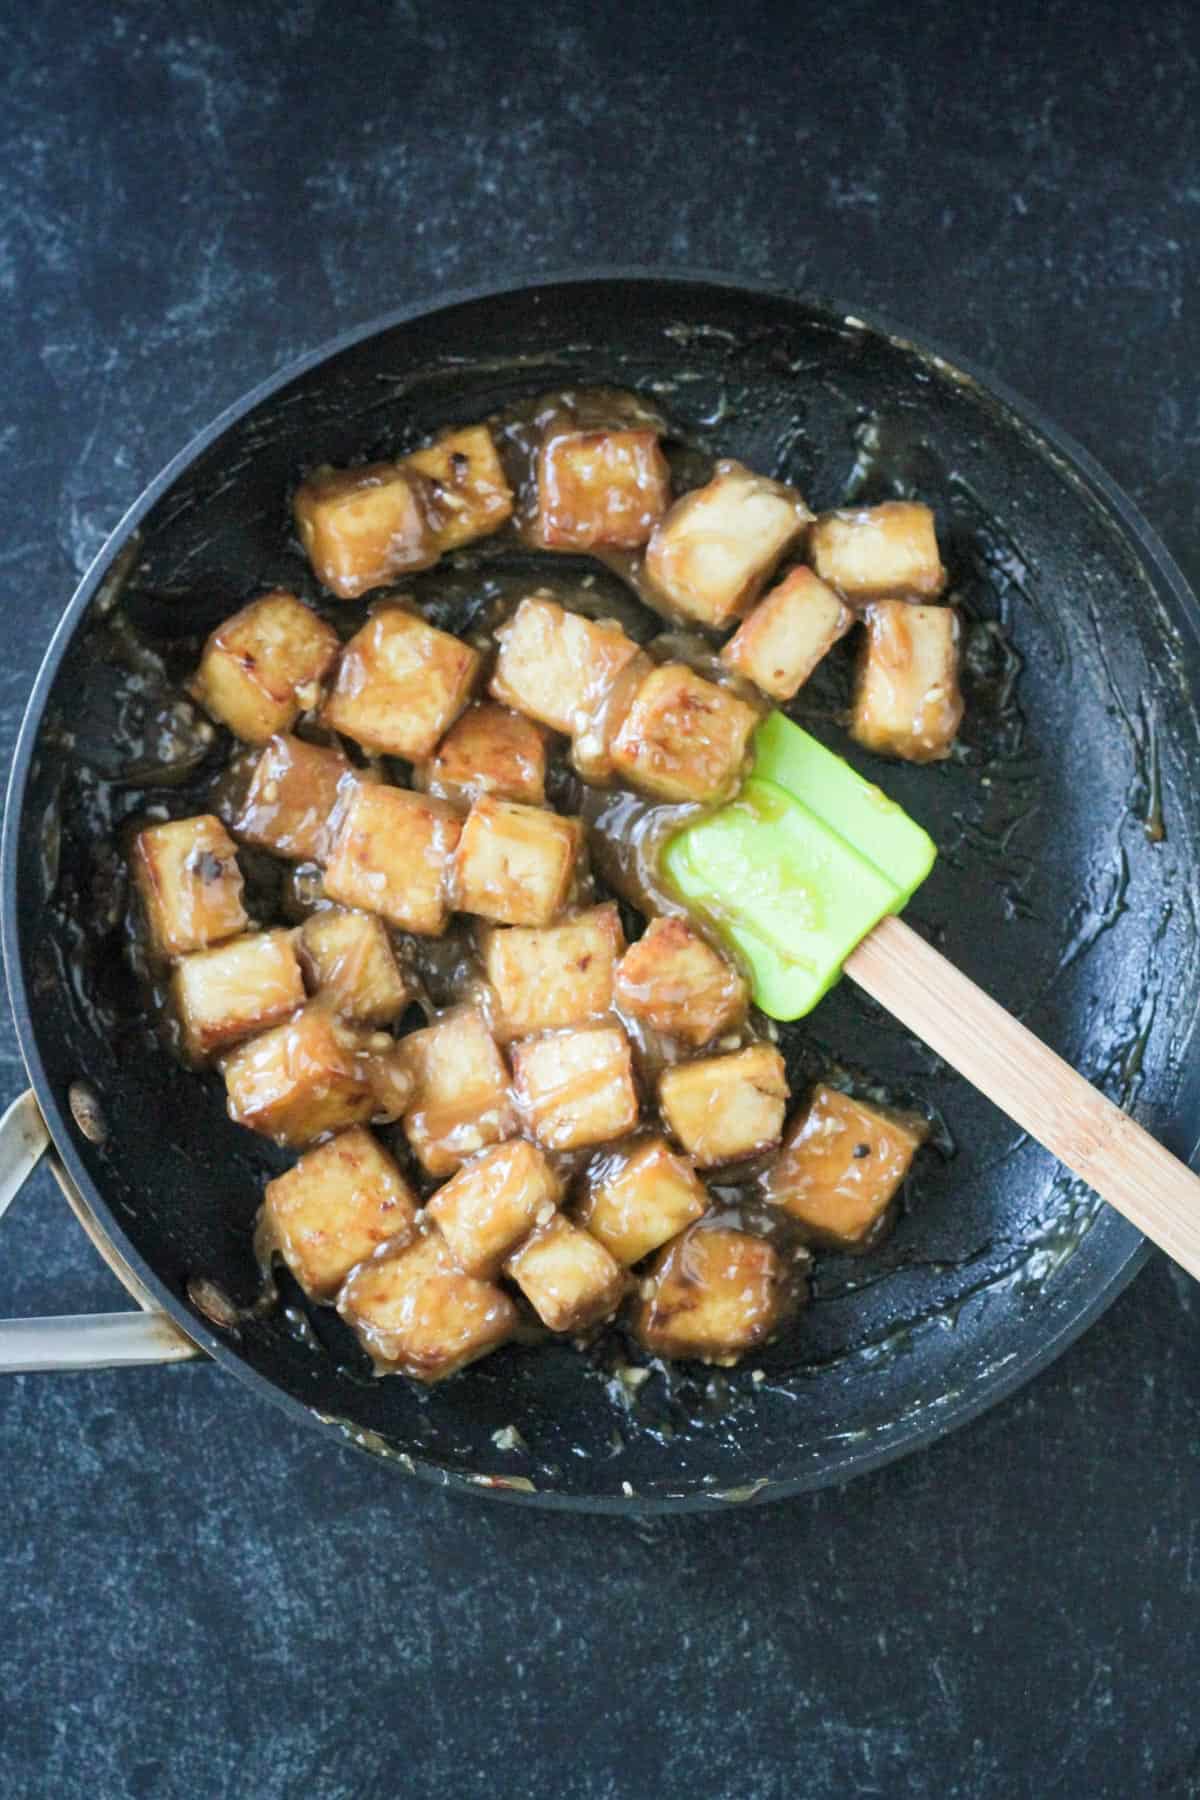 Tofu cubes in a sticky, saucy glaze in a skillet.